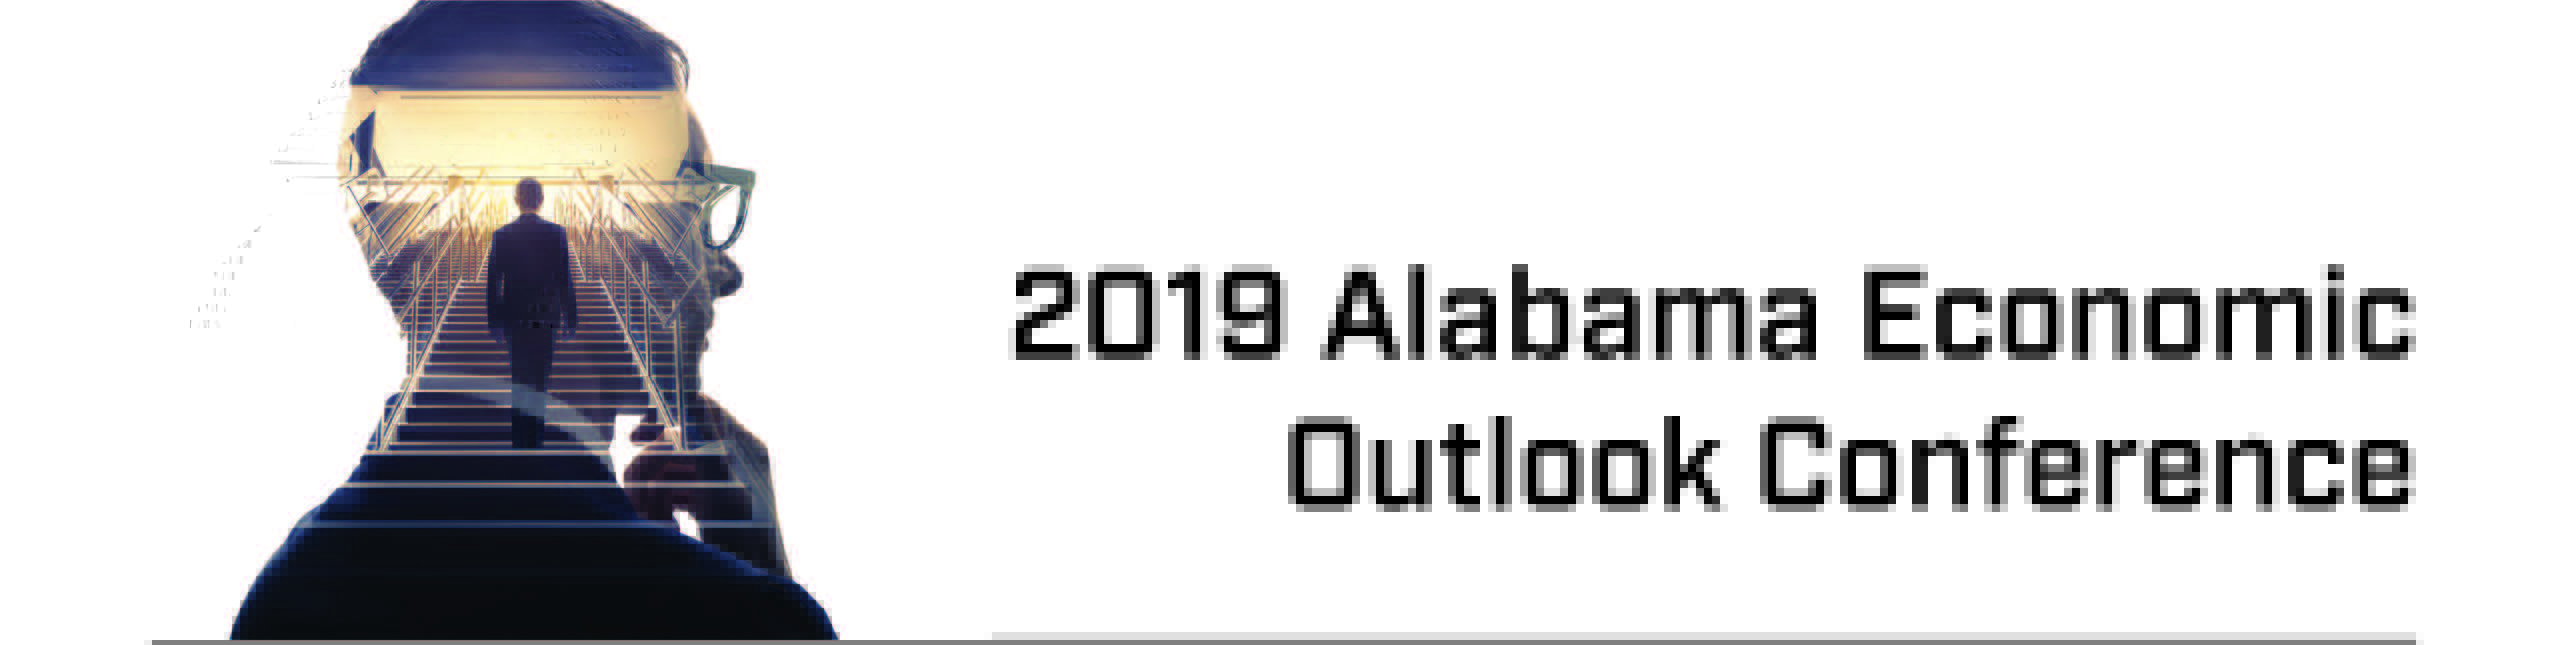 2019 Alabama Economic Outlook Conference